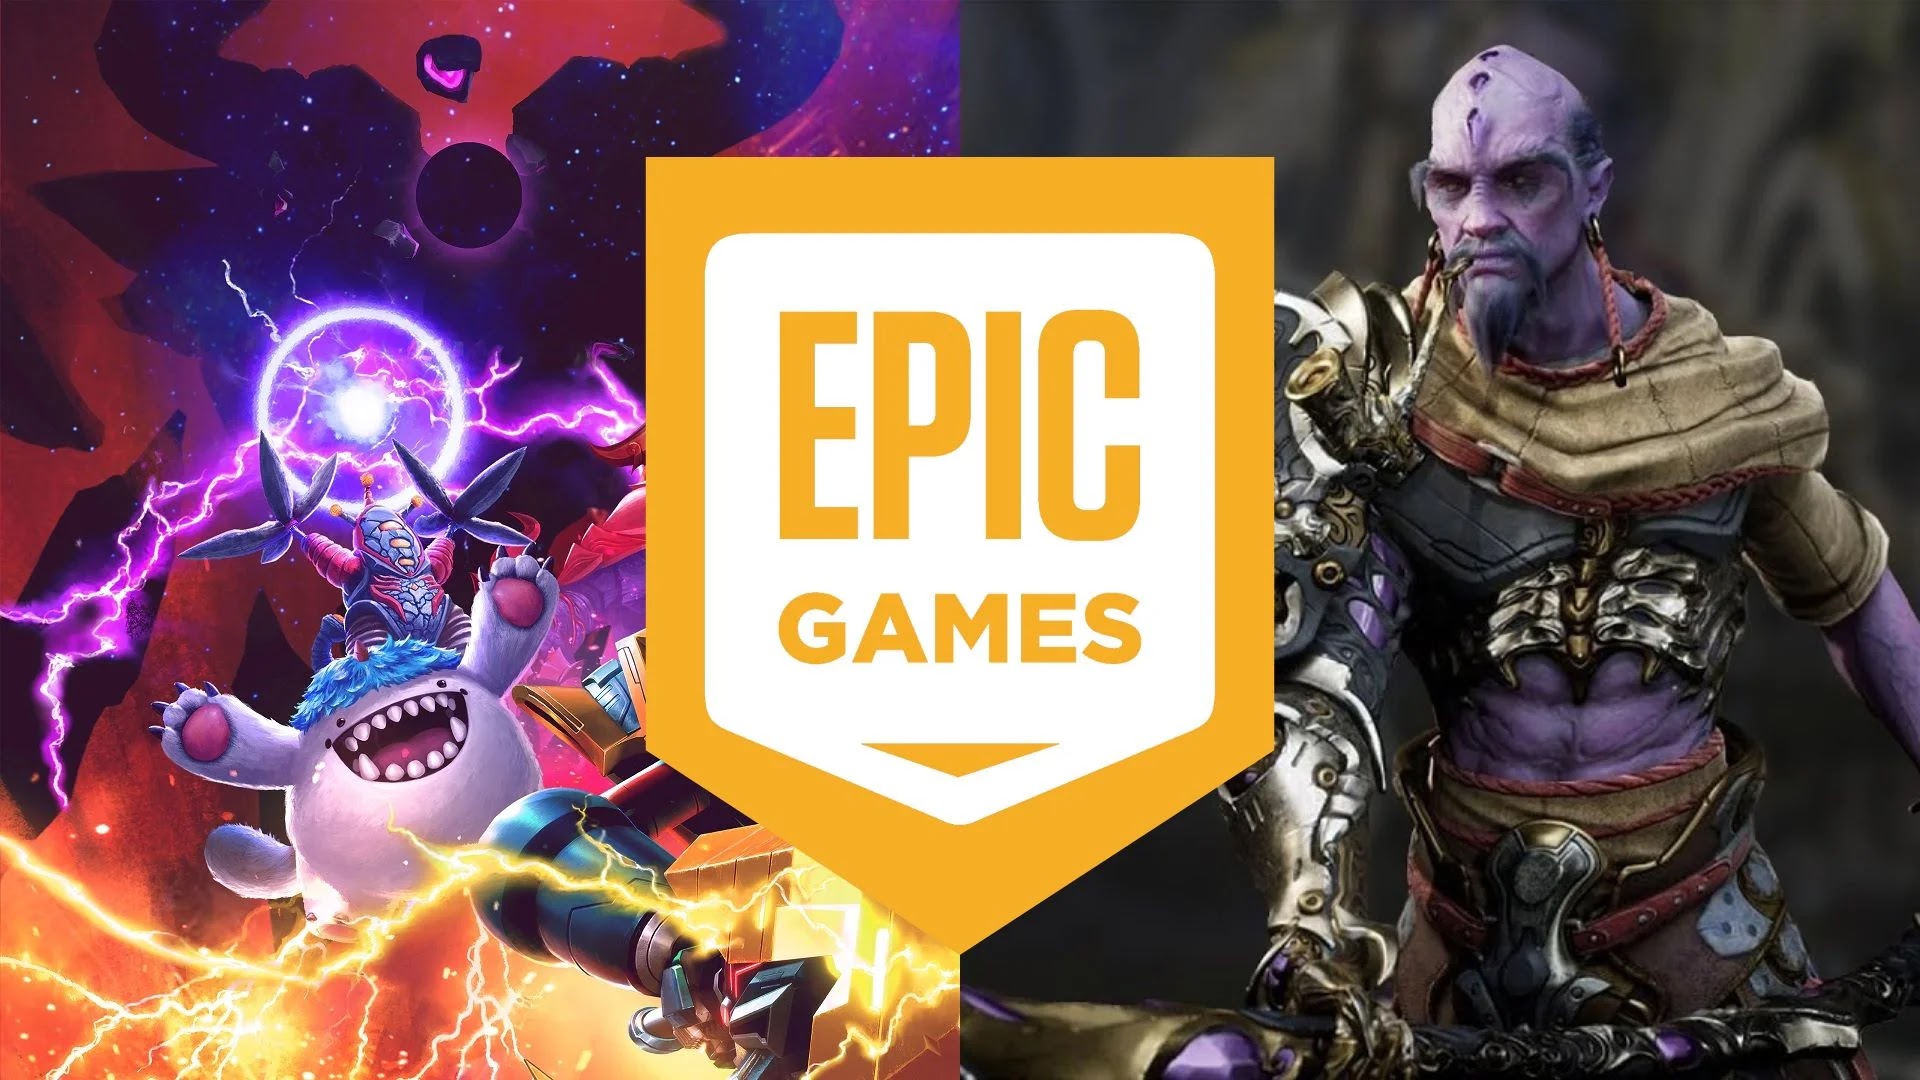 Epic Games libera dois jogos grátis nesta quinta-feira (30)! Confira